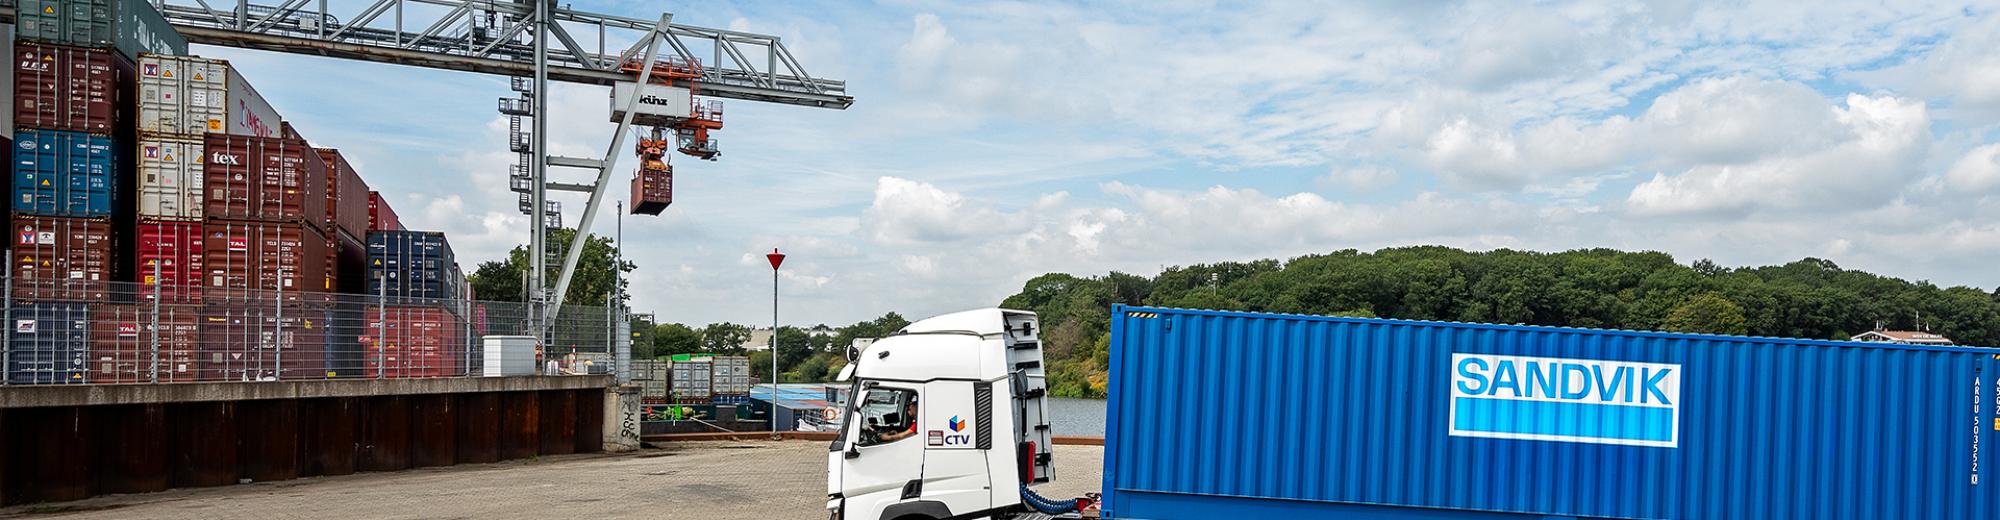 Sandvik vrachtwagen | Seacon Logistics